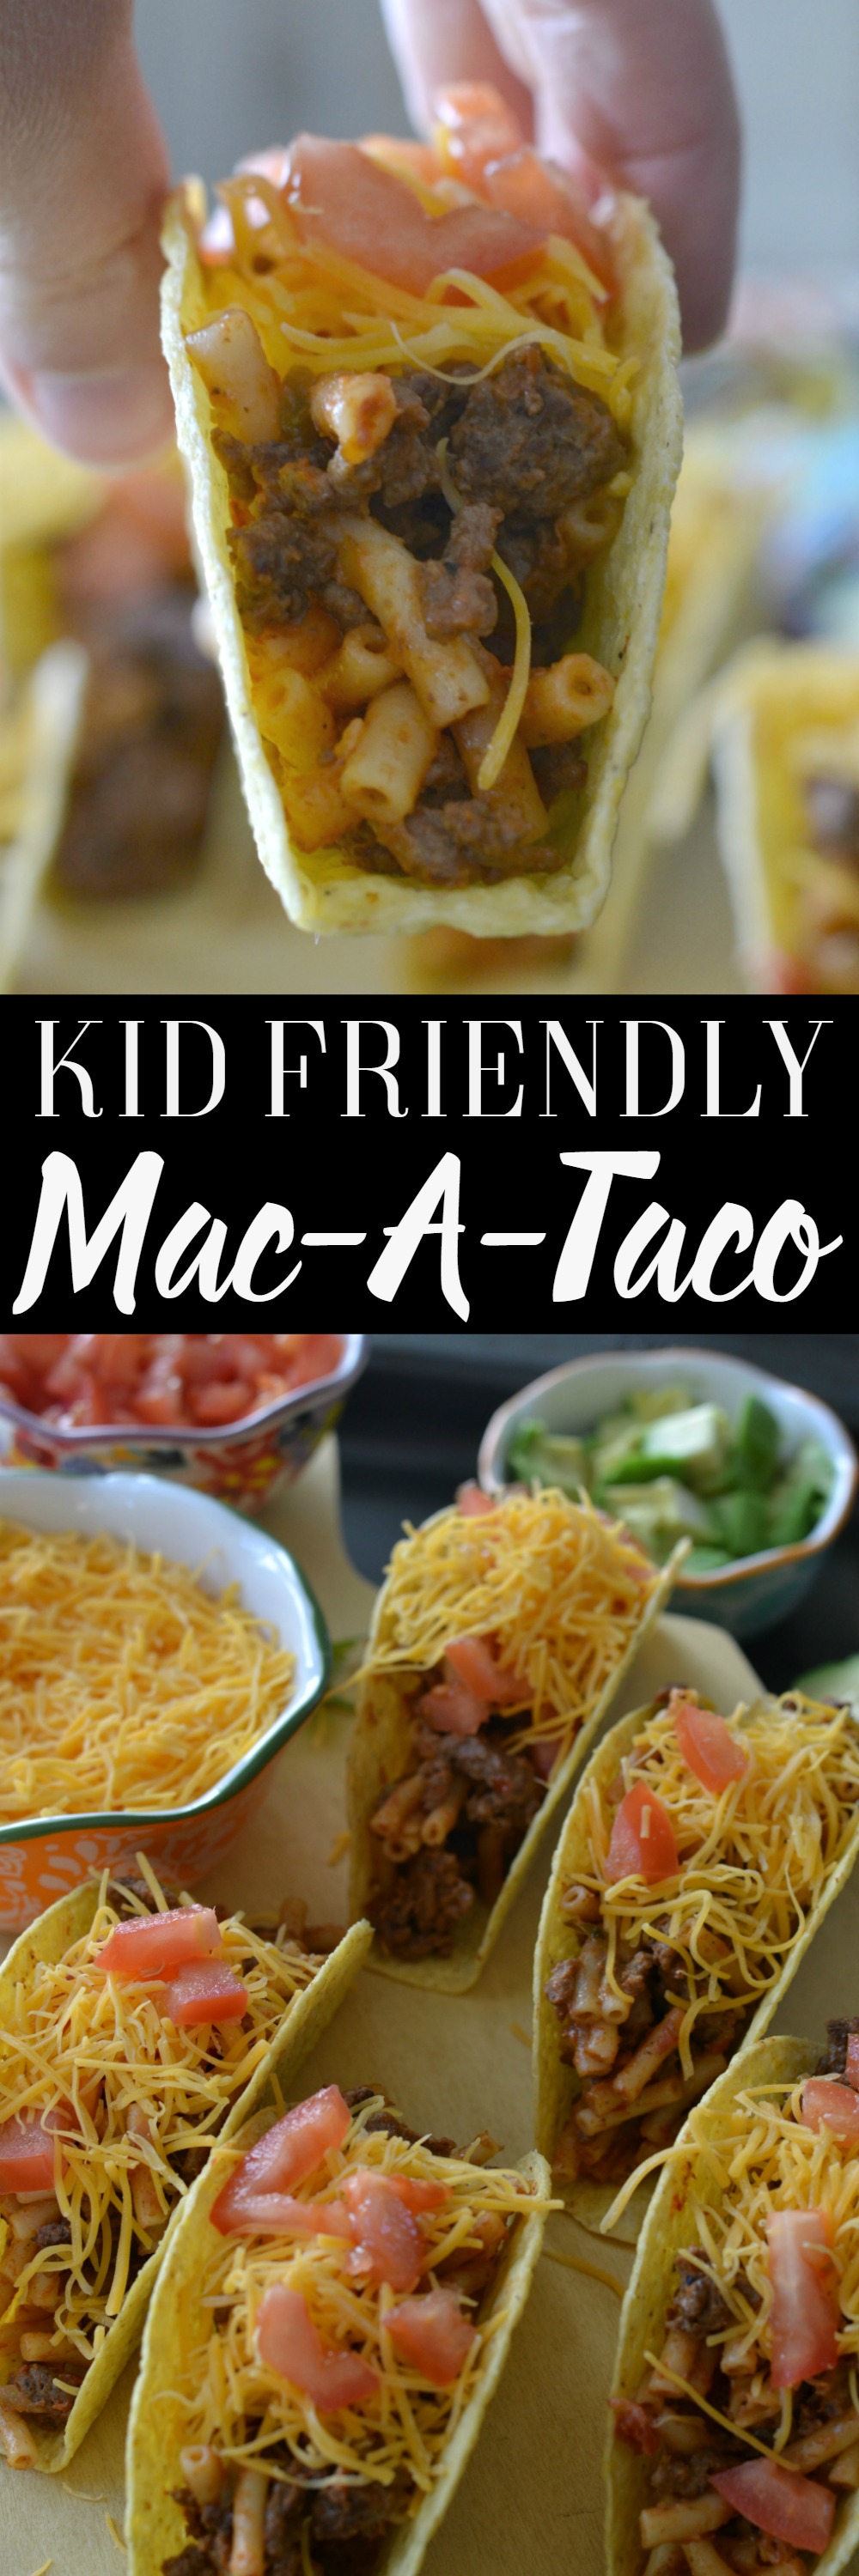 Mac-A-Taco- Macaroni Taco- Kid friendly dinner